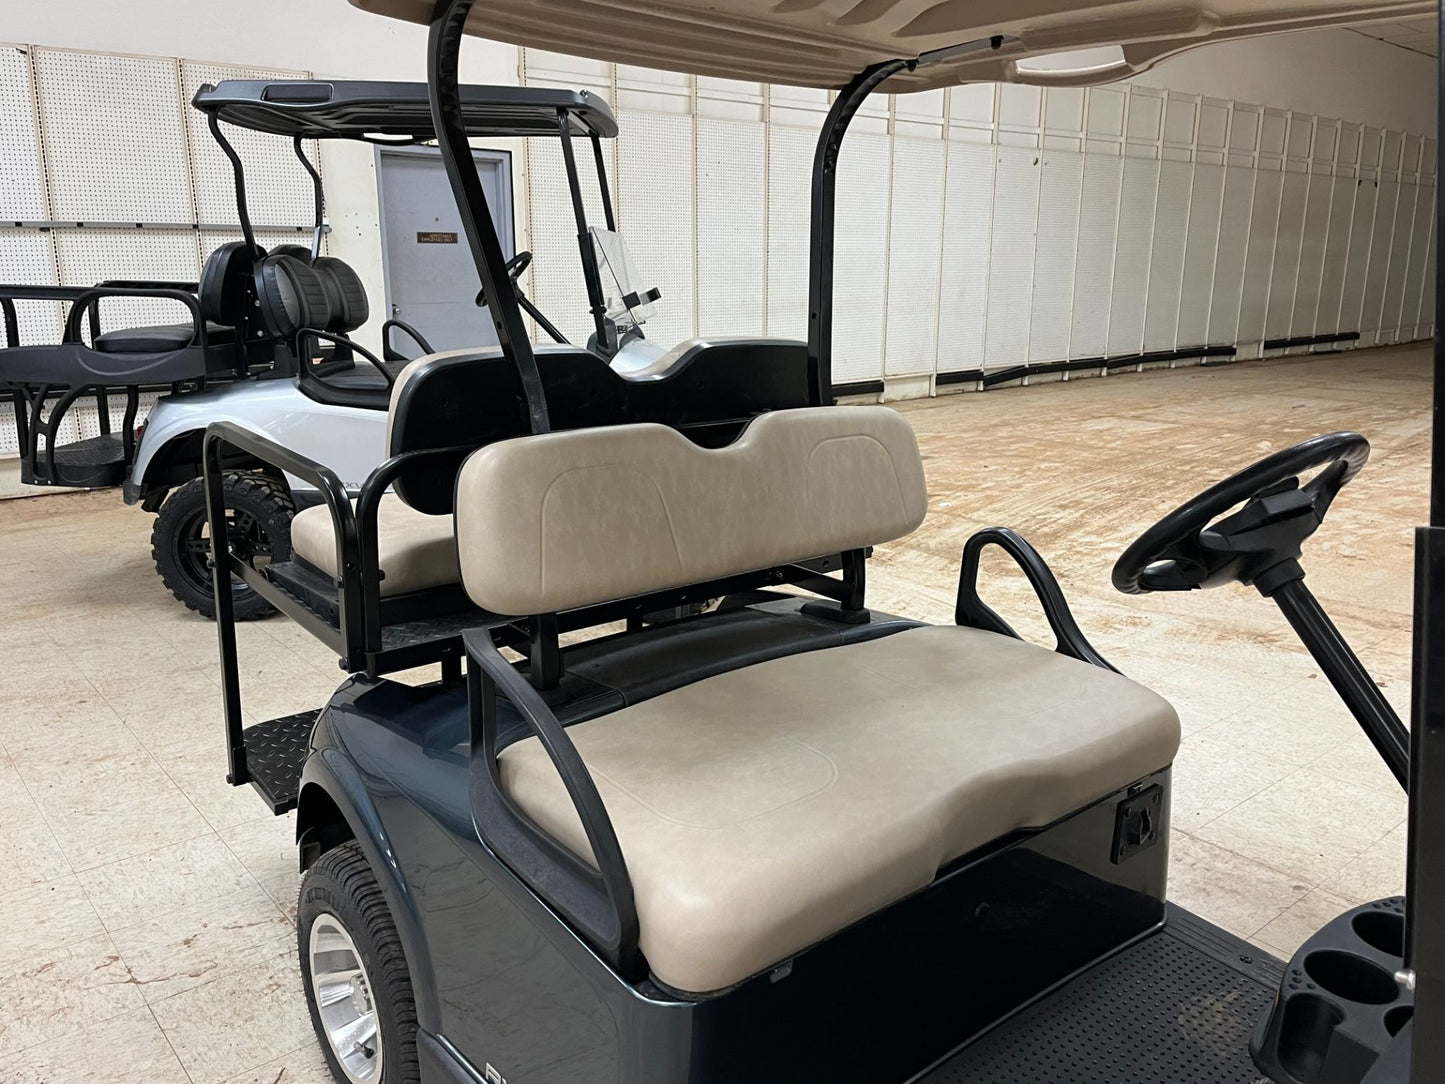 2017 E-z-go Golf Rxv Electric Kryptex Golf Carts